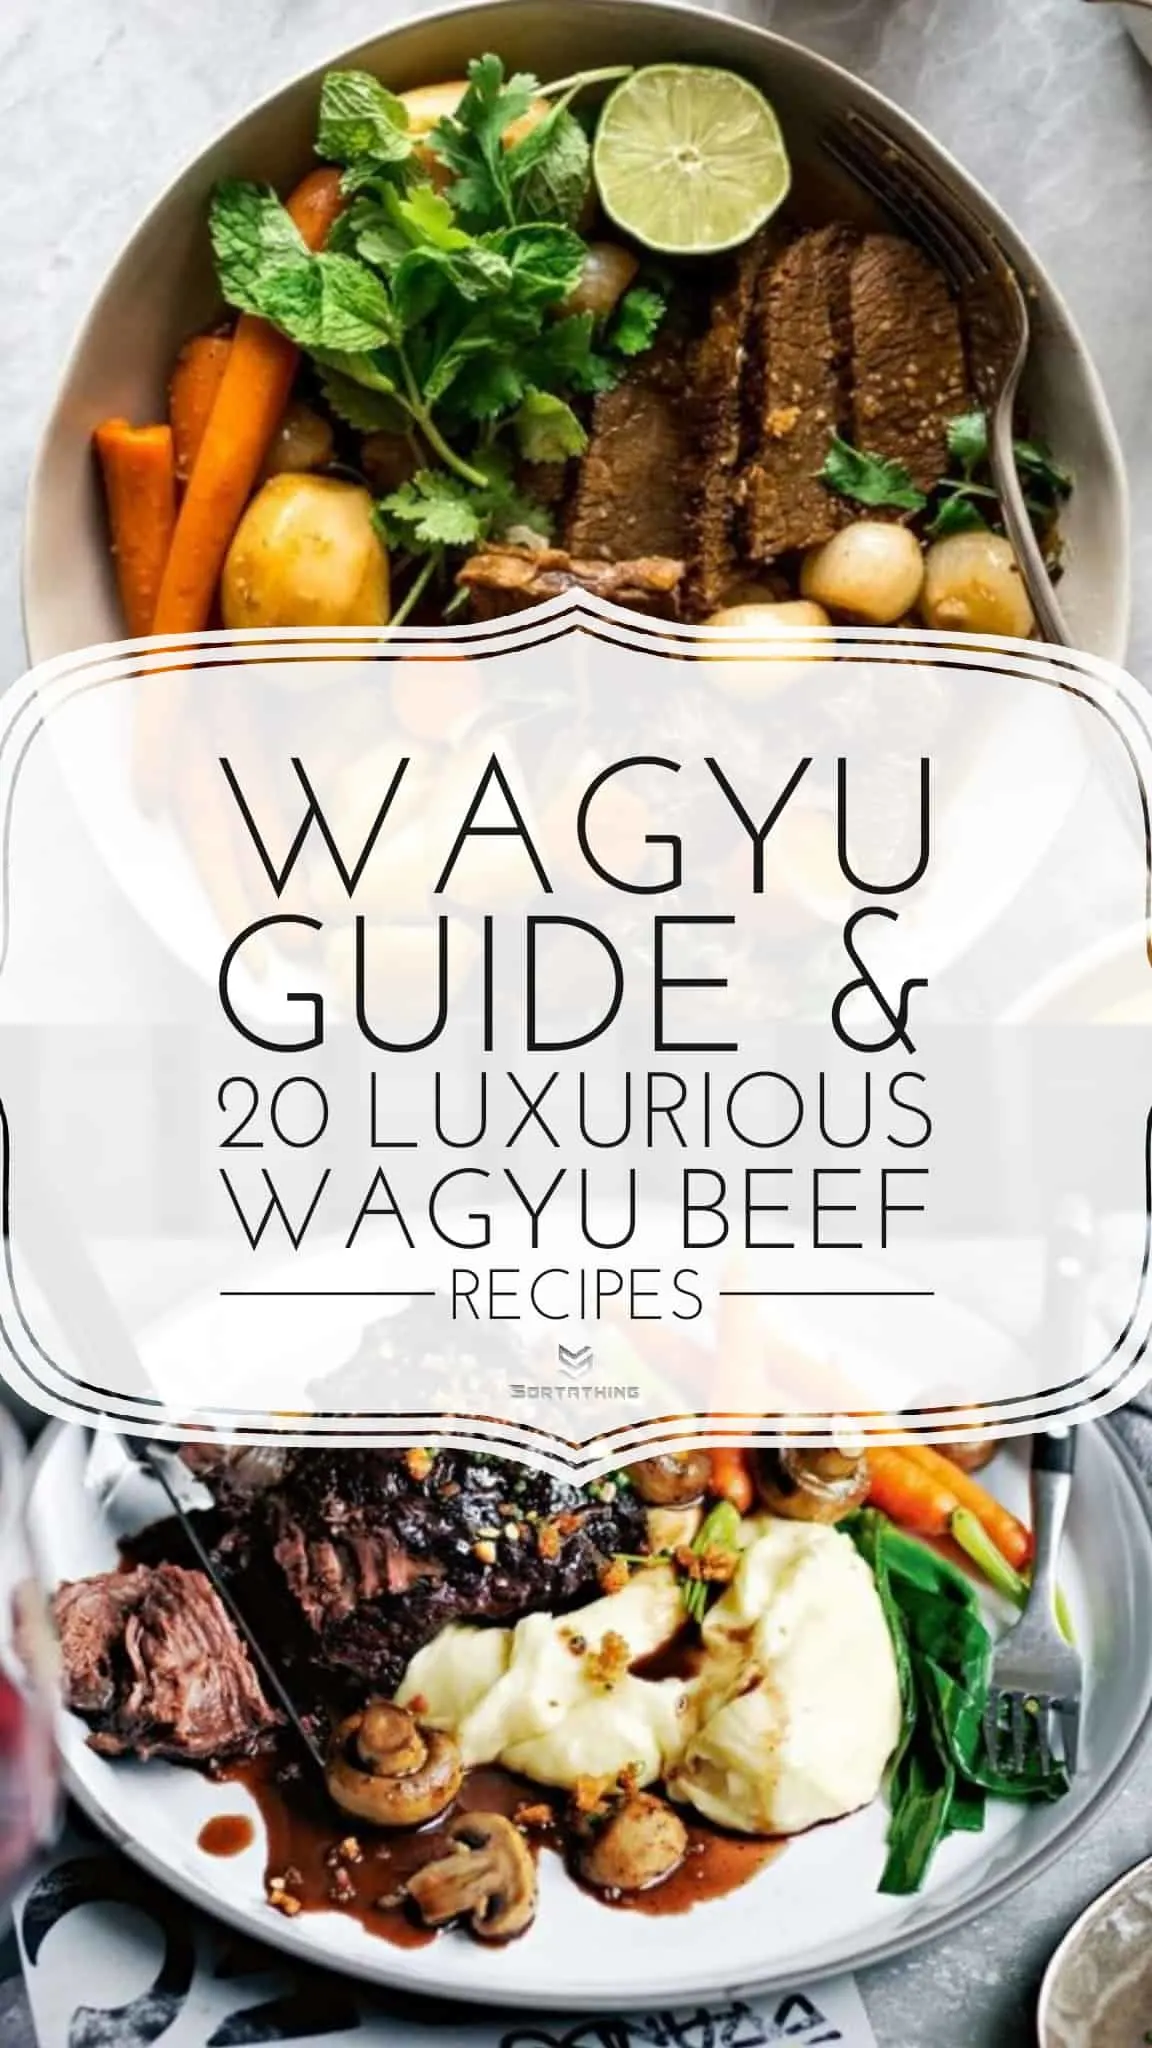 Vietnamese Braised Wagyu Brisket Recipe and Daube with Wagyu Beef